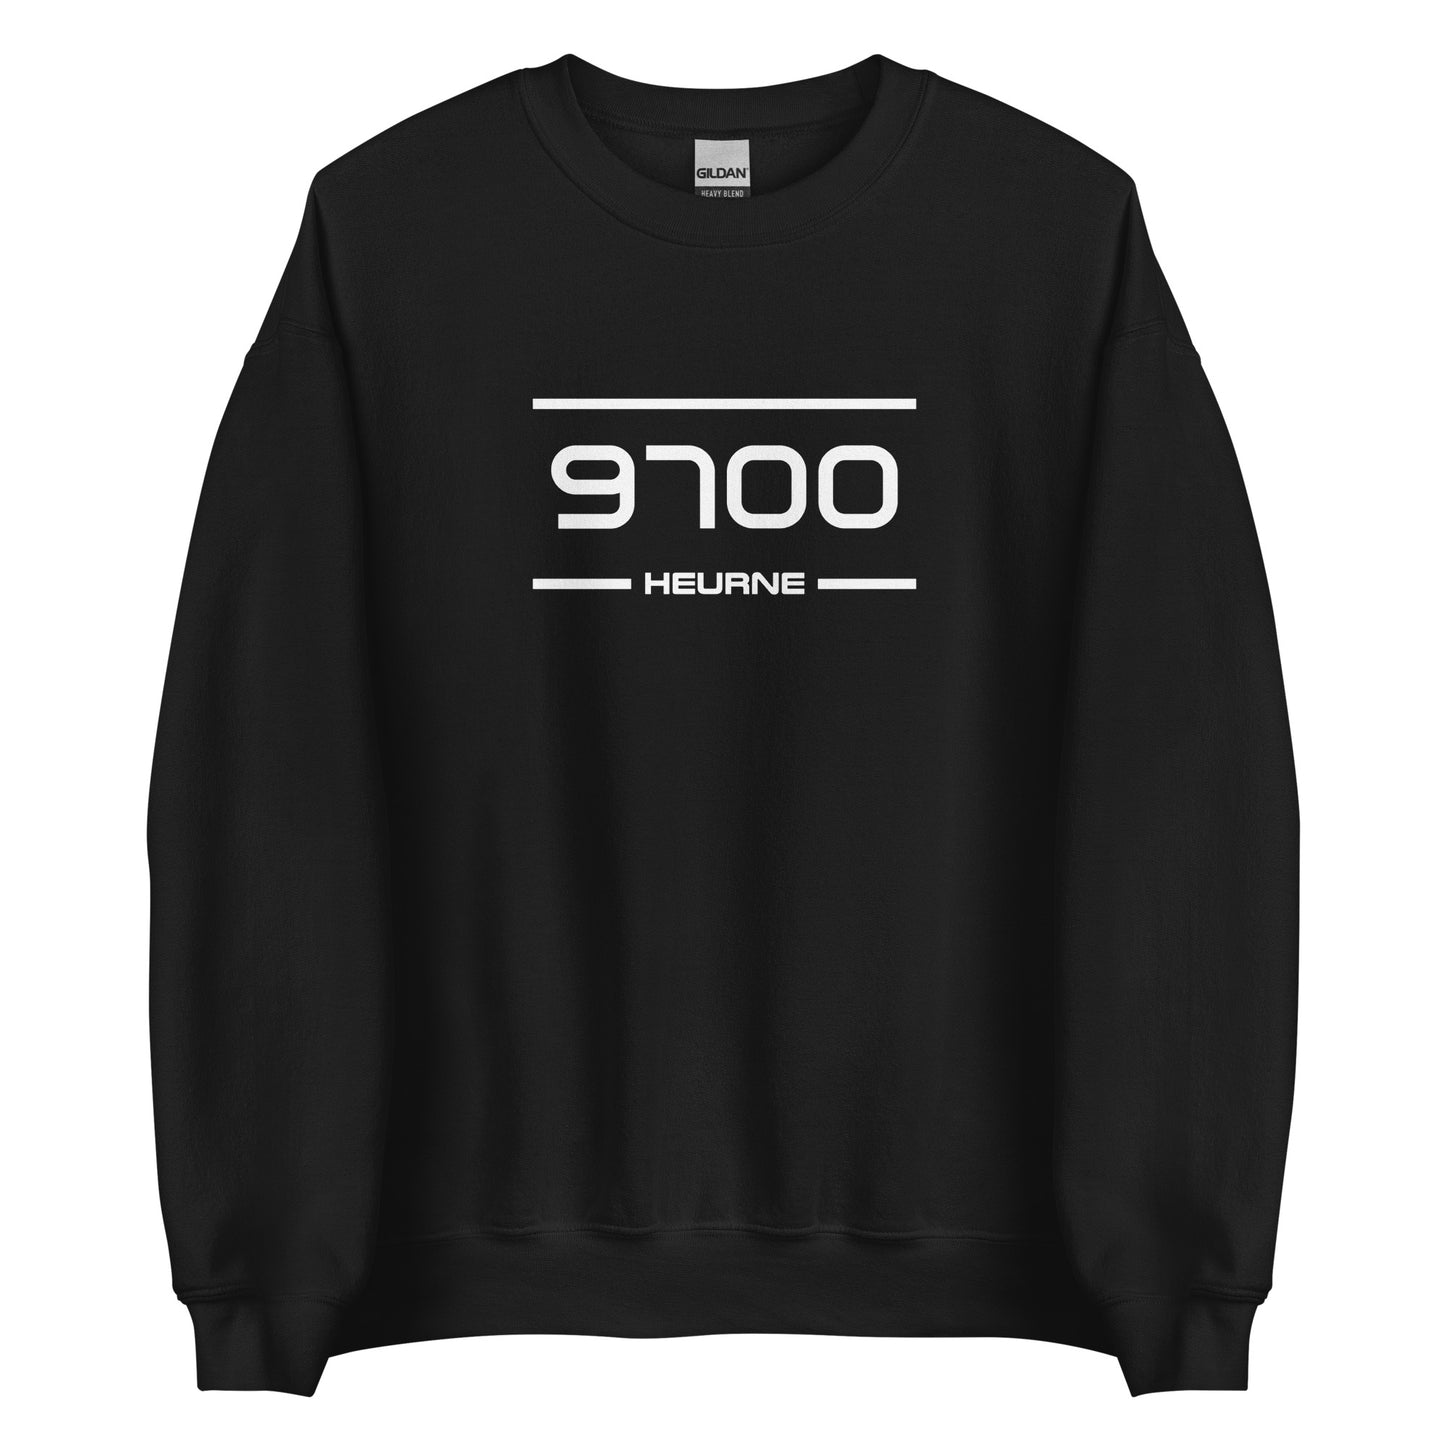 Sweater - 9700 - Heurne (M/V)